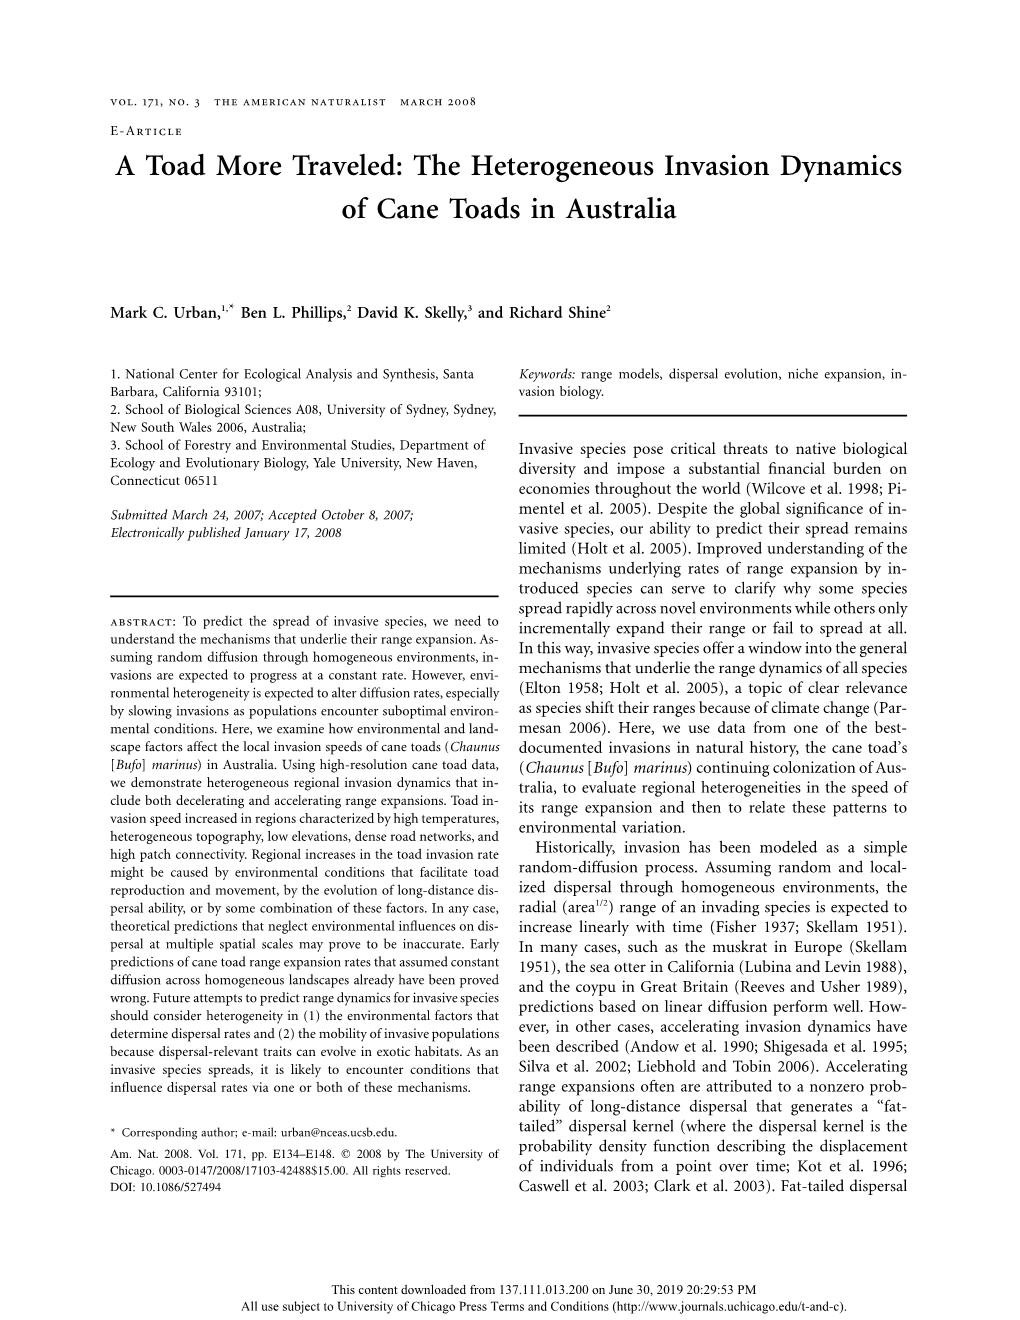 The Heterogeneous Invasion Dynamics of Cane Toads in Australia